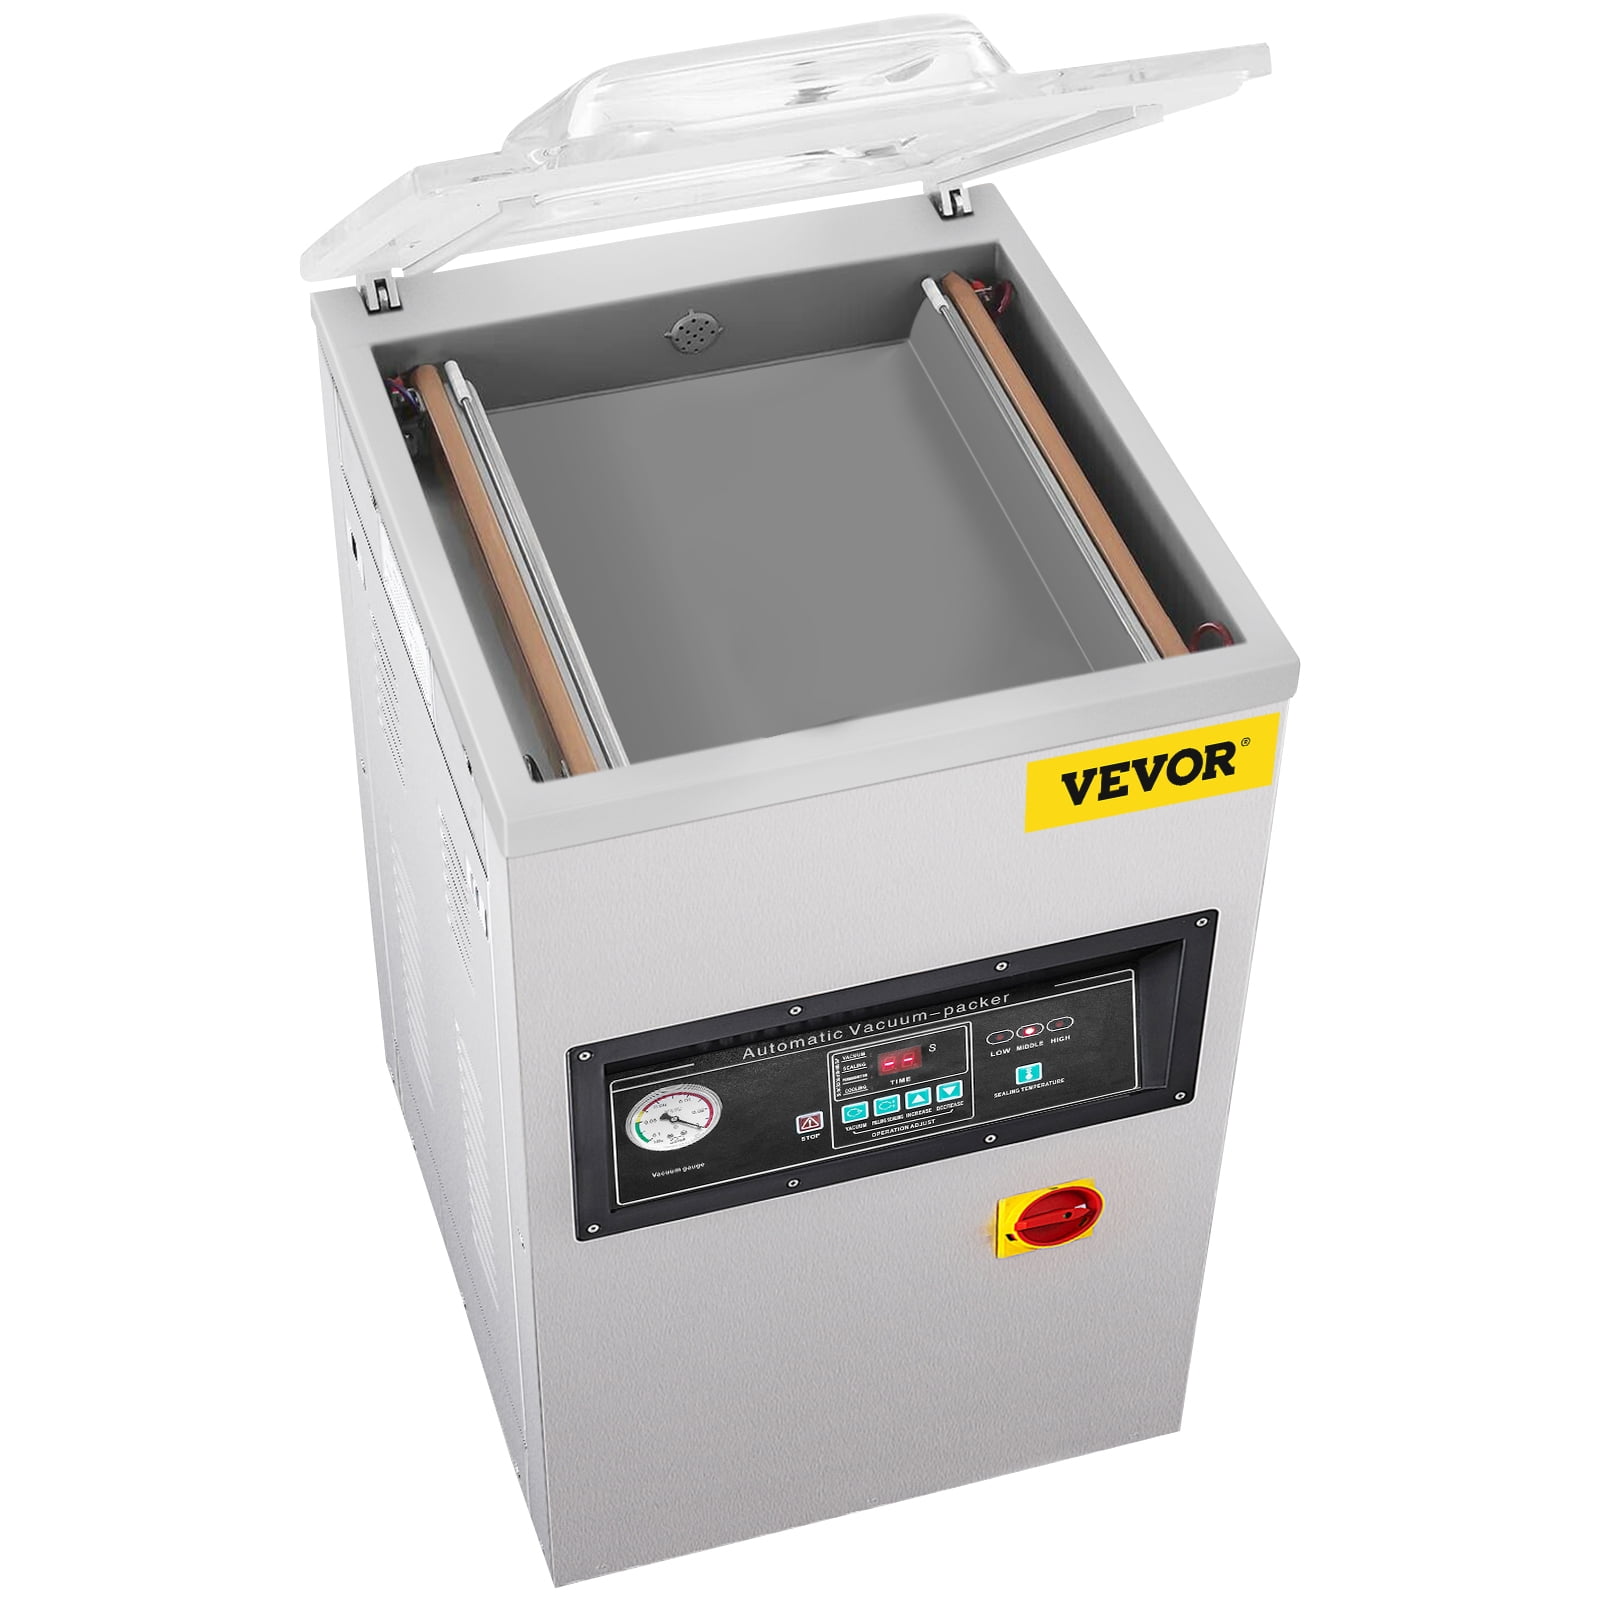 VEVOR Vacuum Sealer Double Chamber Vacuum Packaging Machine 24x18 inch Bars